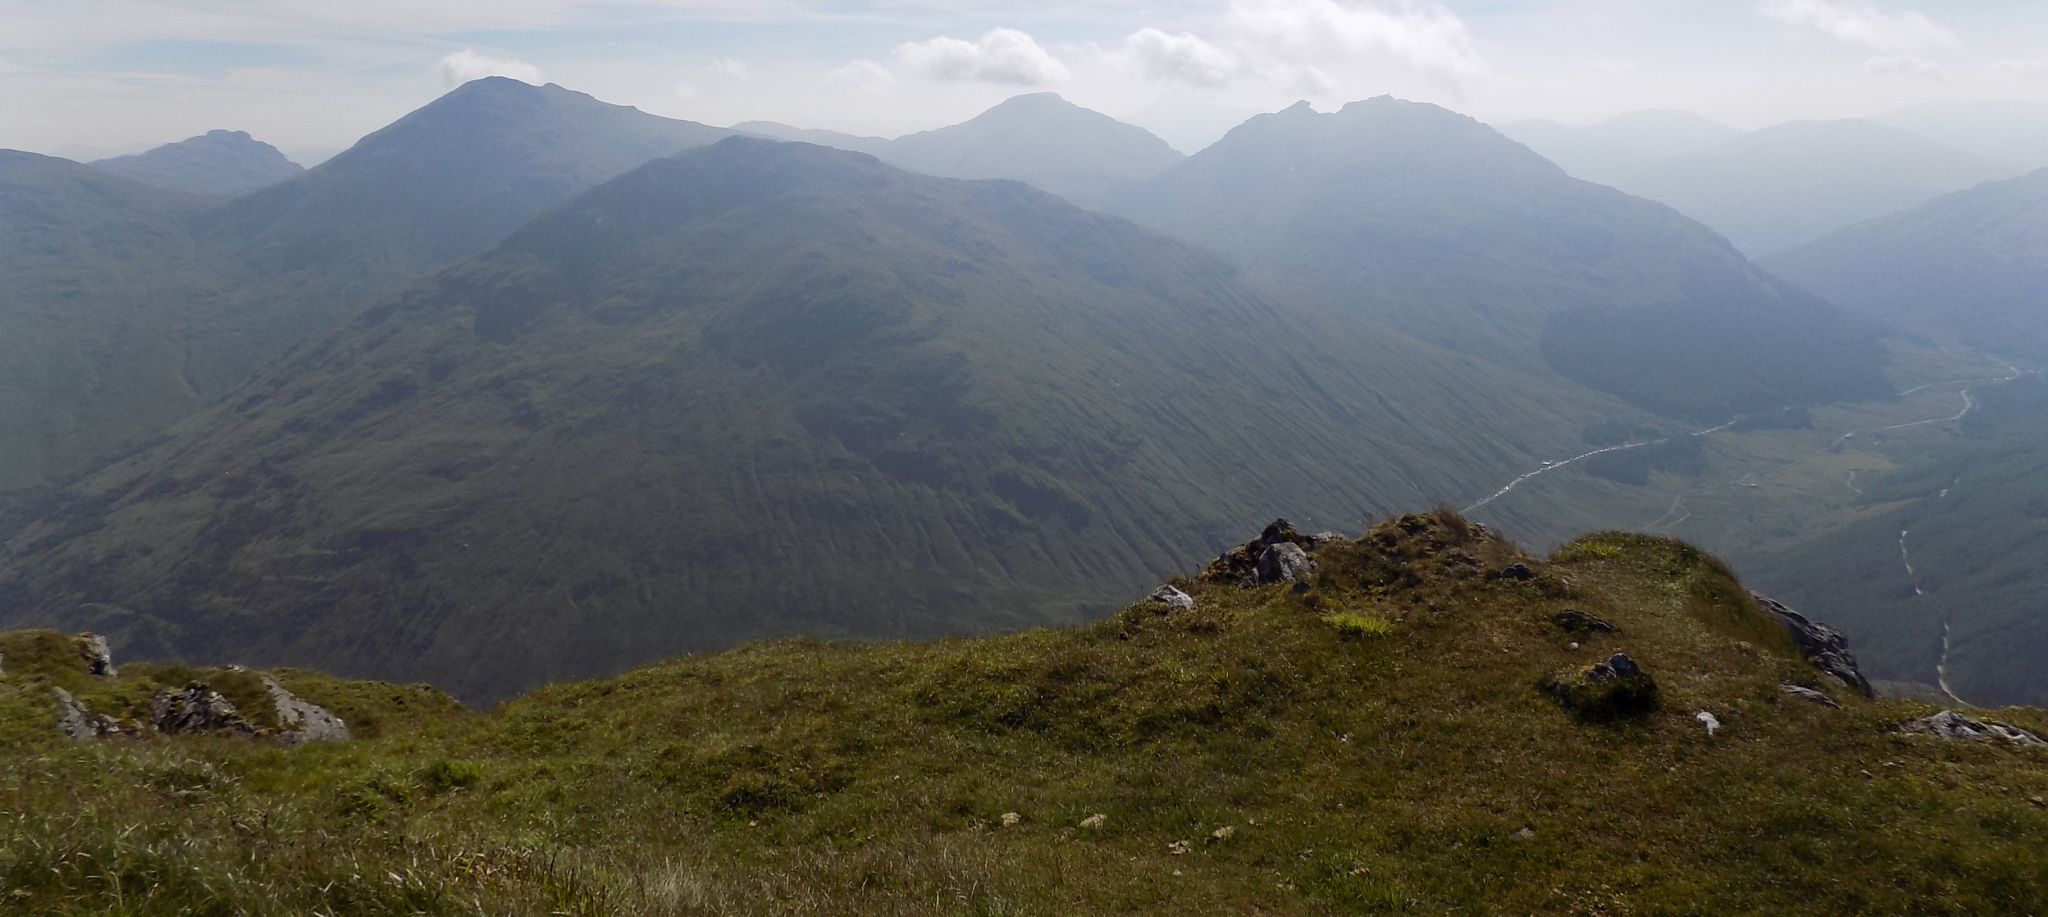 Arrochar Alps from Beinn an Lochain in the Southern Highlands of Scotland